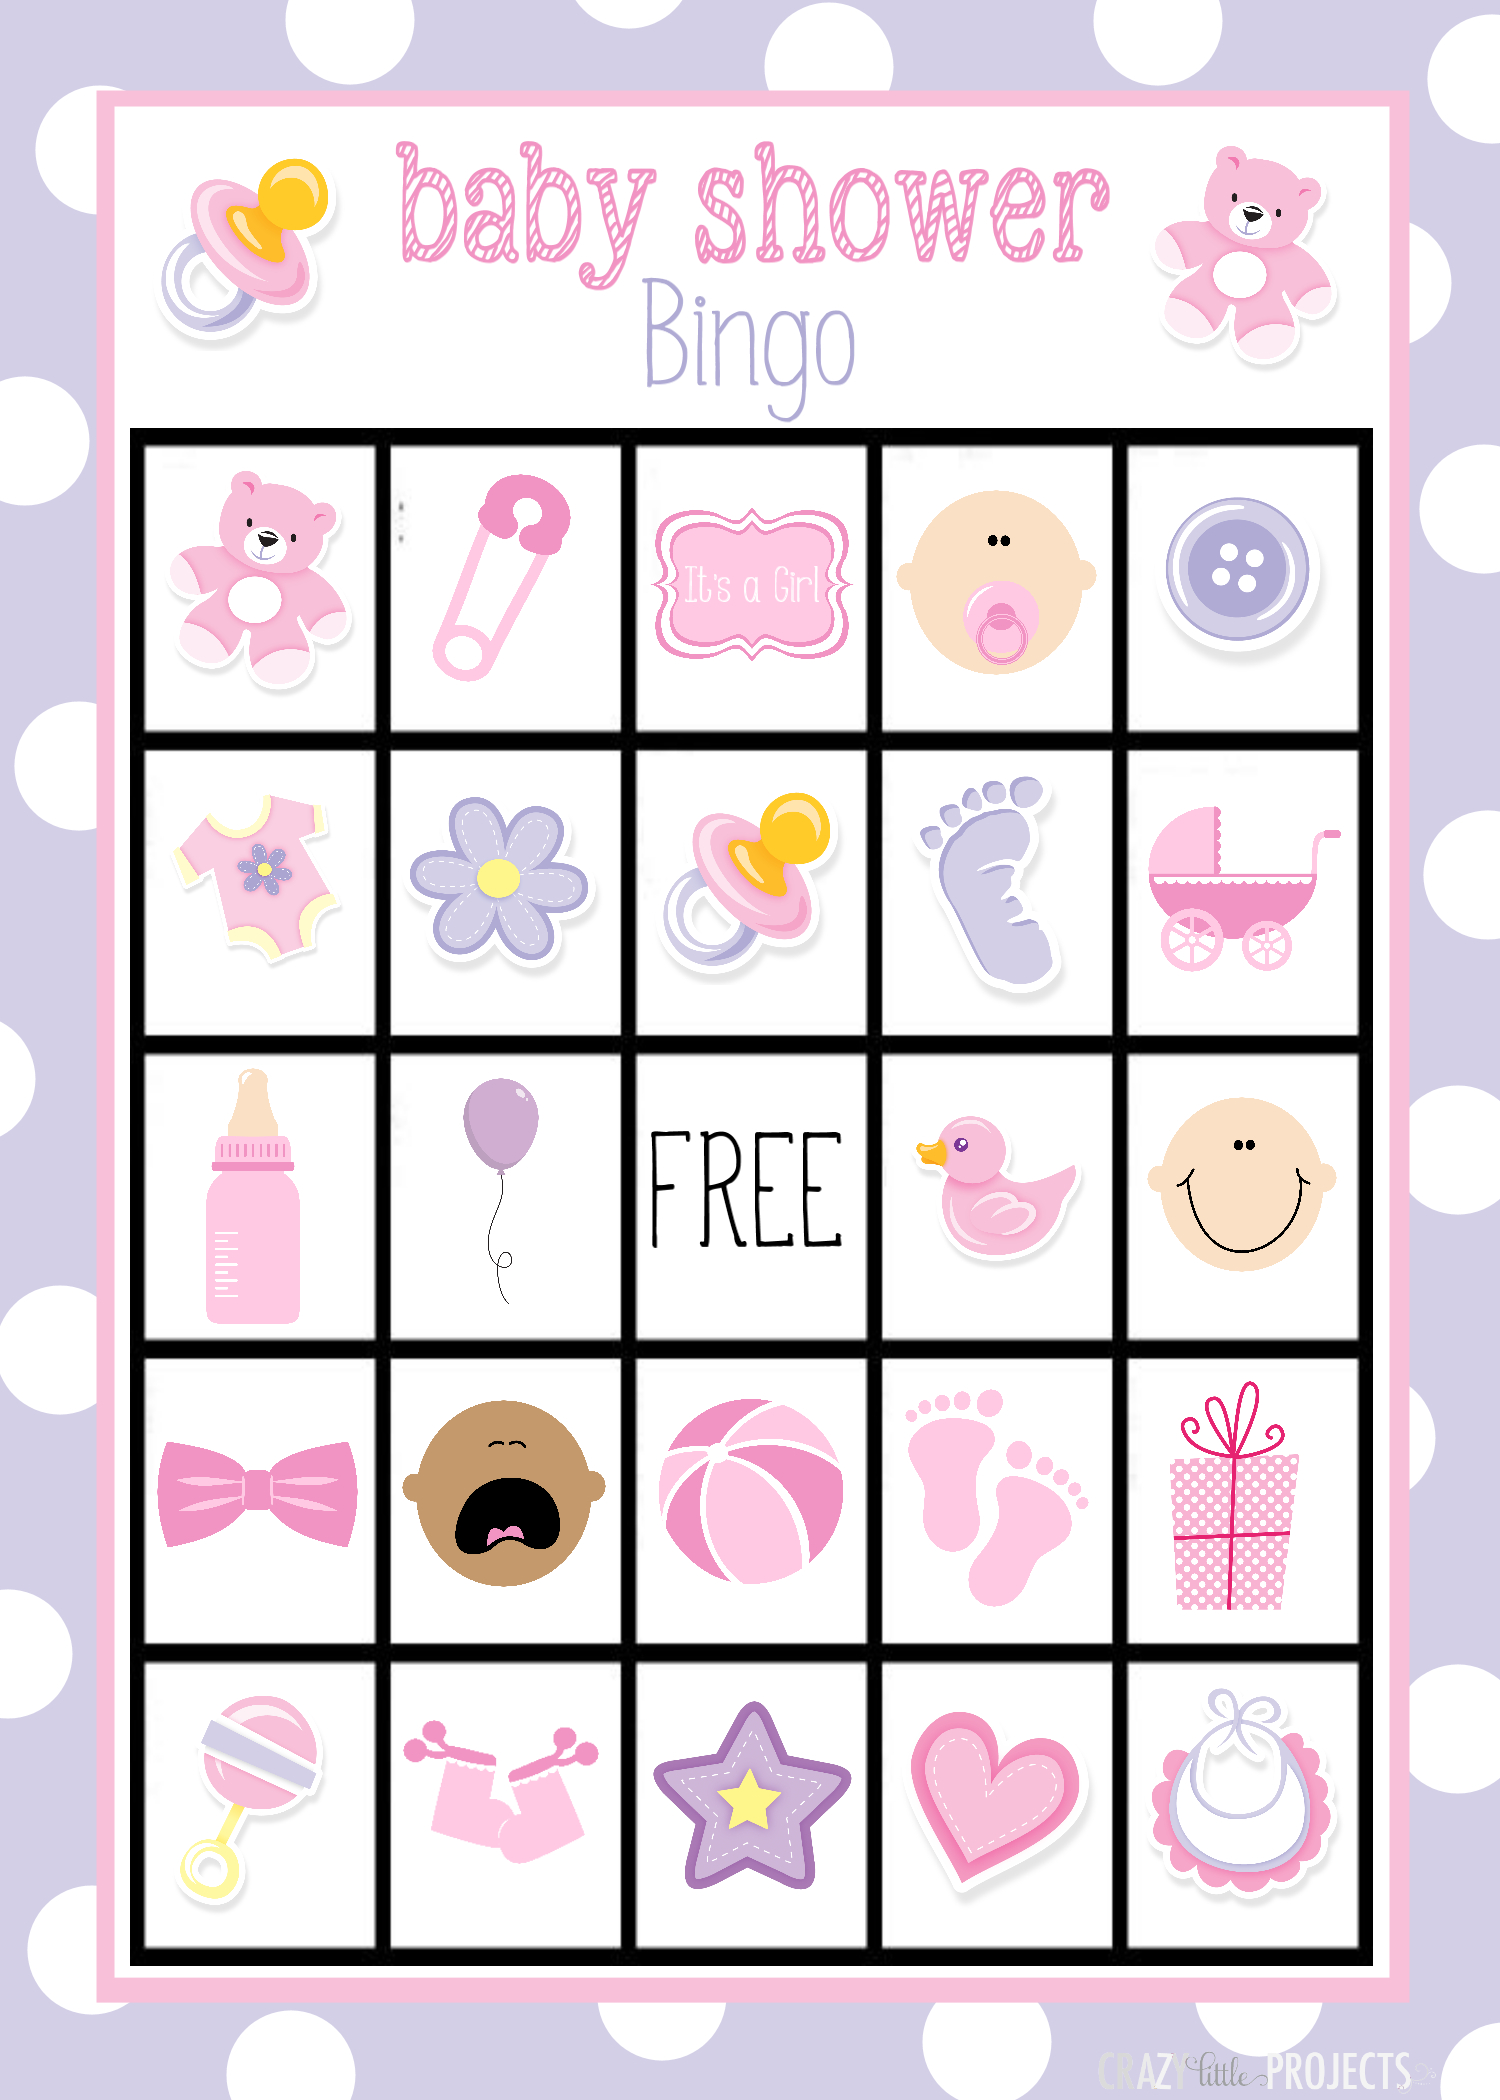 Baby Shower Bingo Cards - Free Printable Baby Shower Bingo Blank Cards